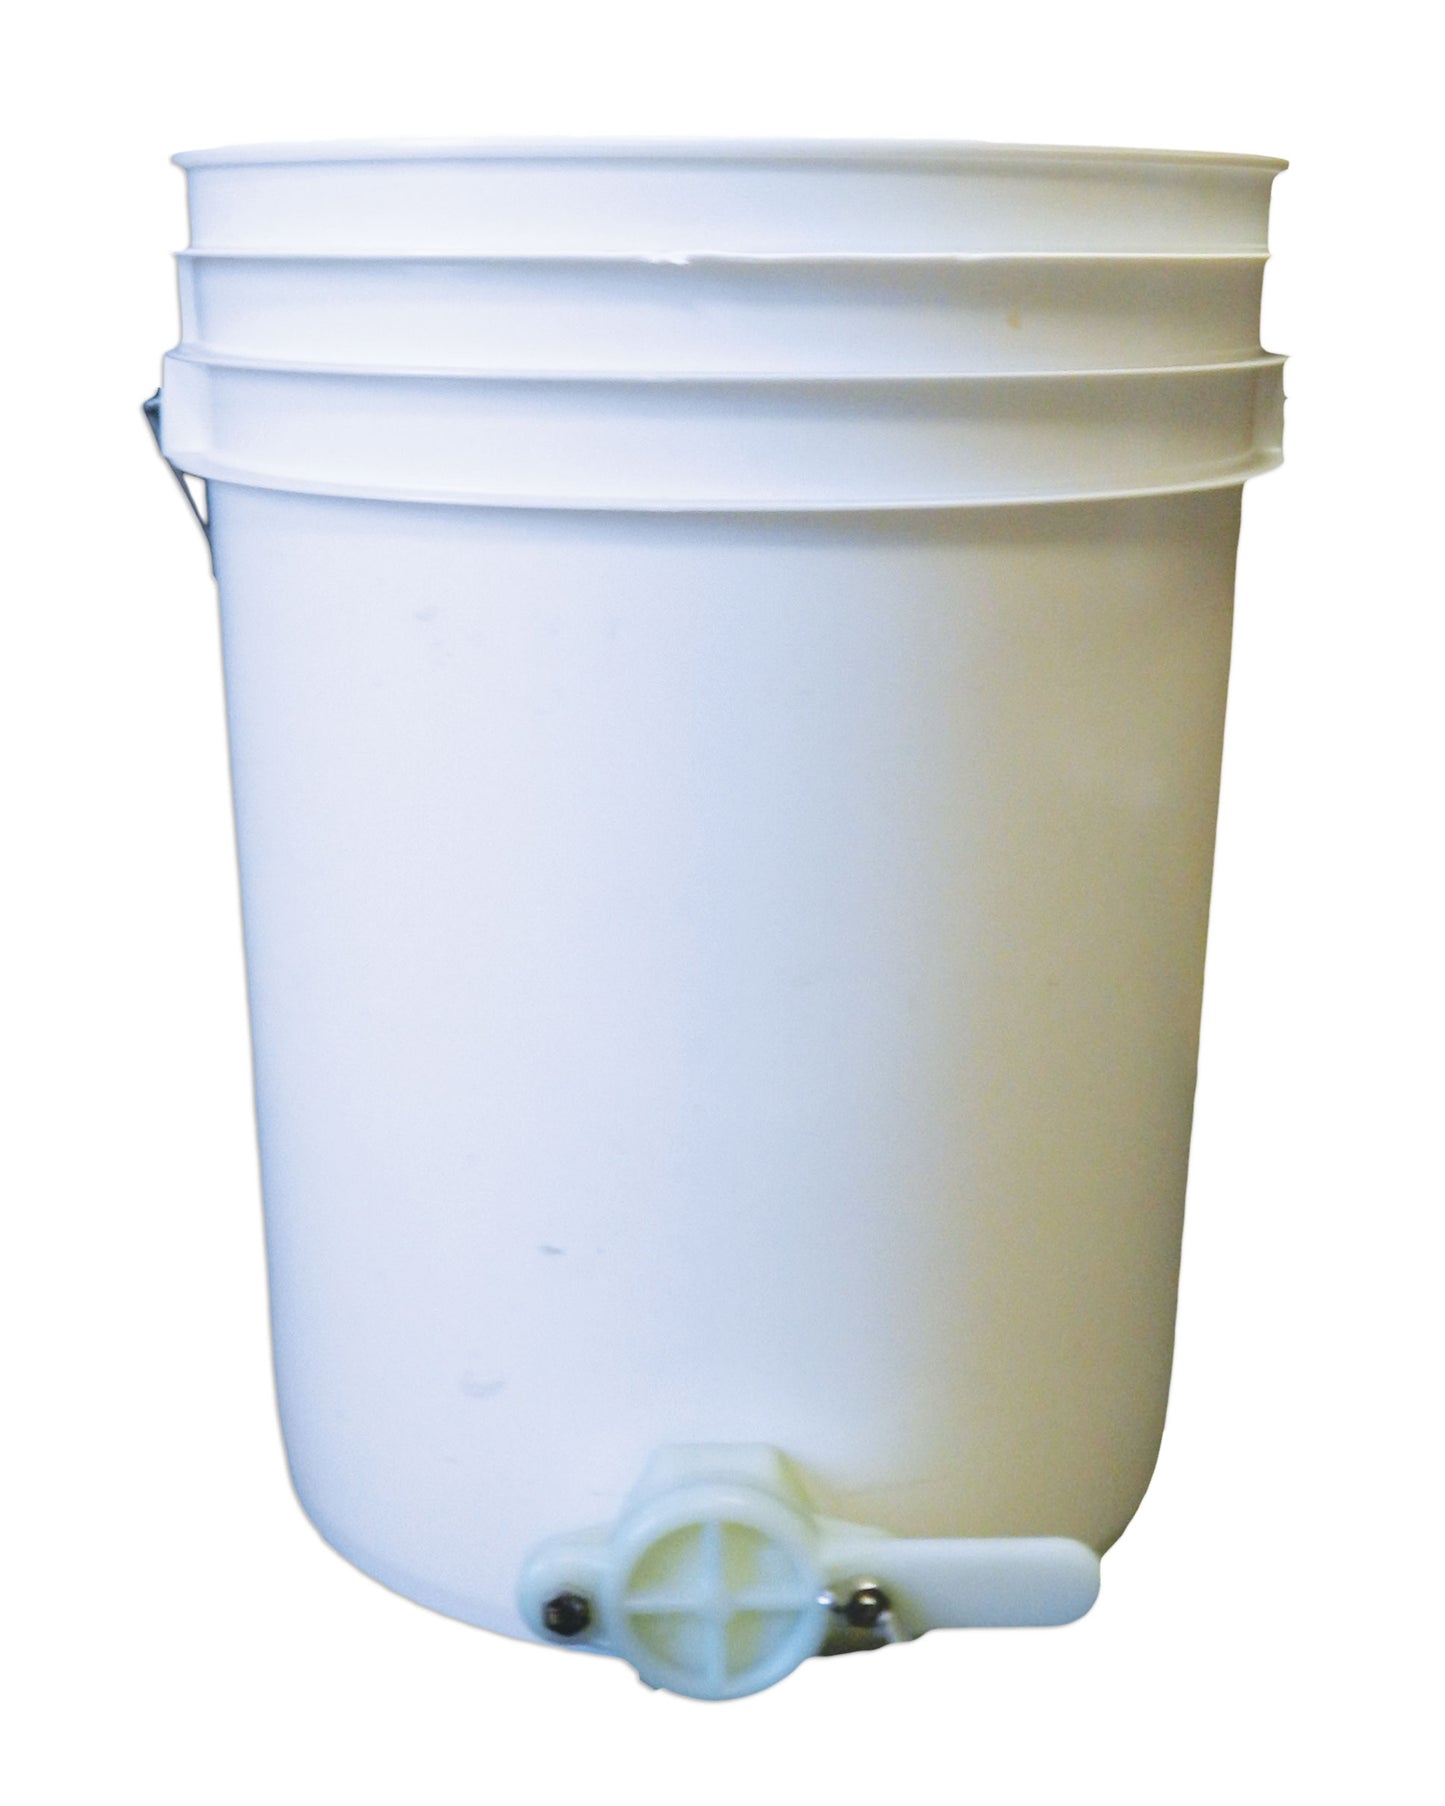 5 Gallon bucket with Honey Gate